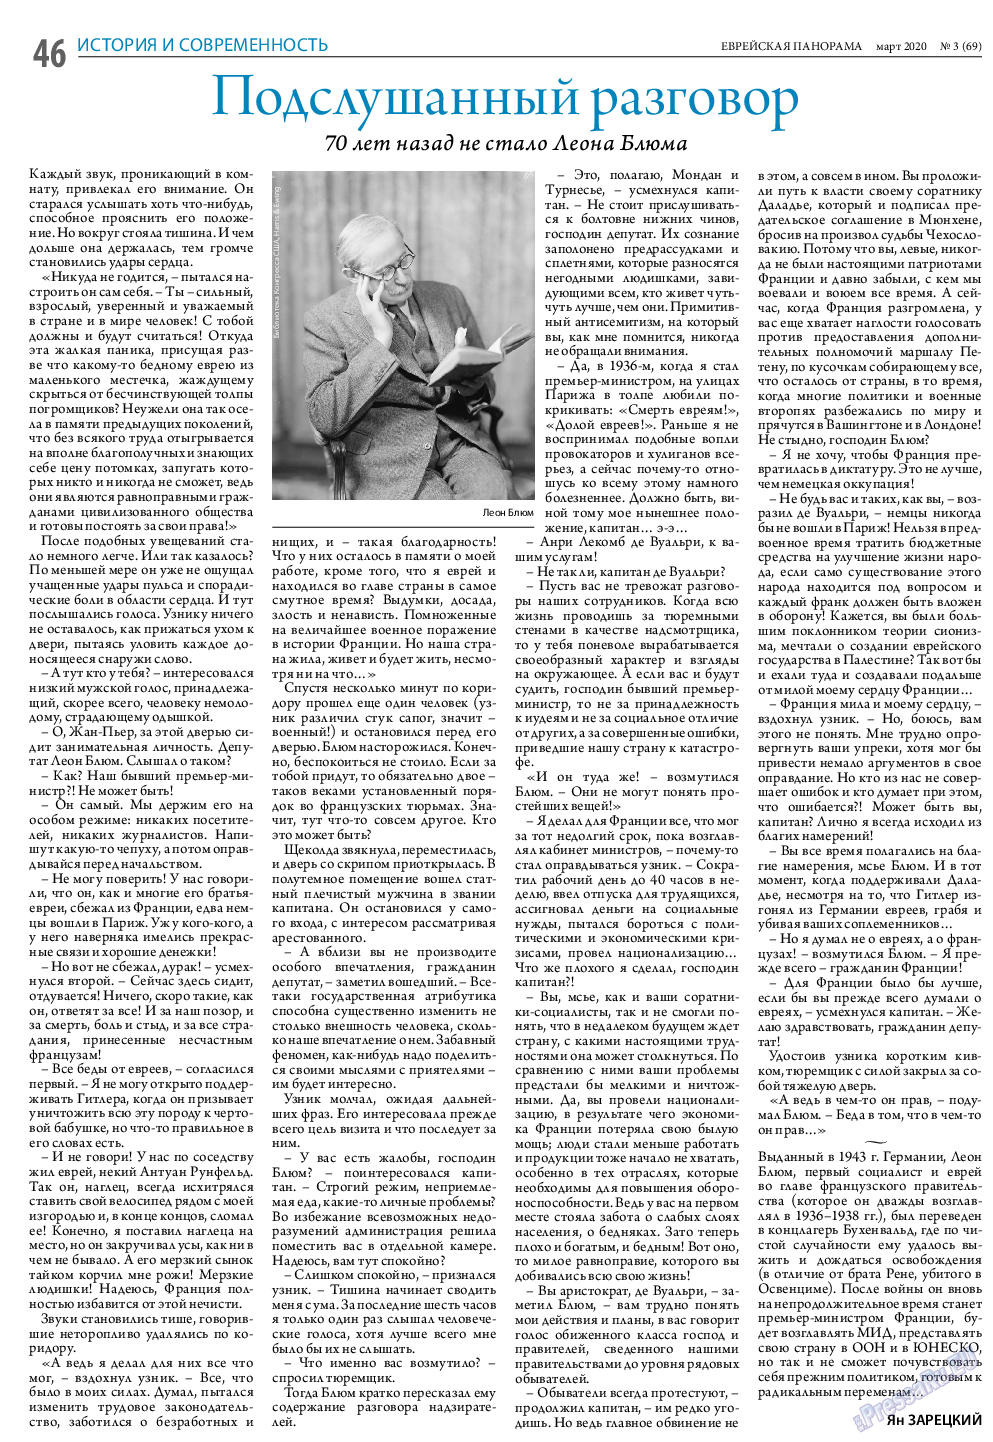 Еврейская панорама, газета. 2020 №3 стр.46